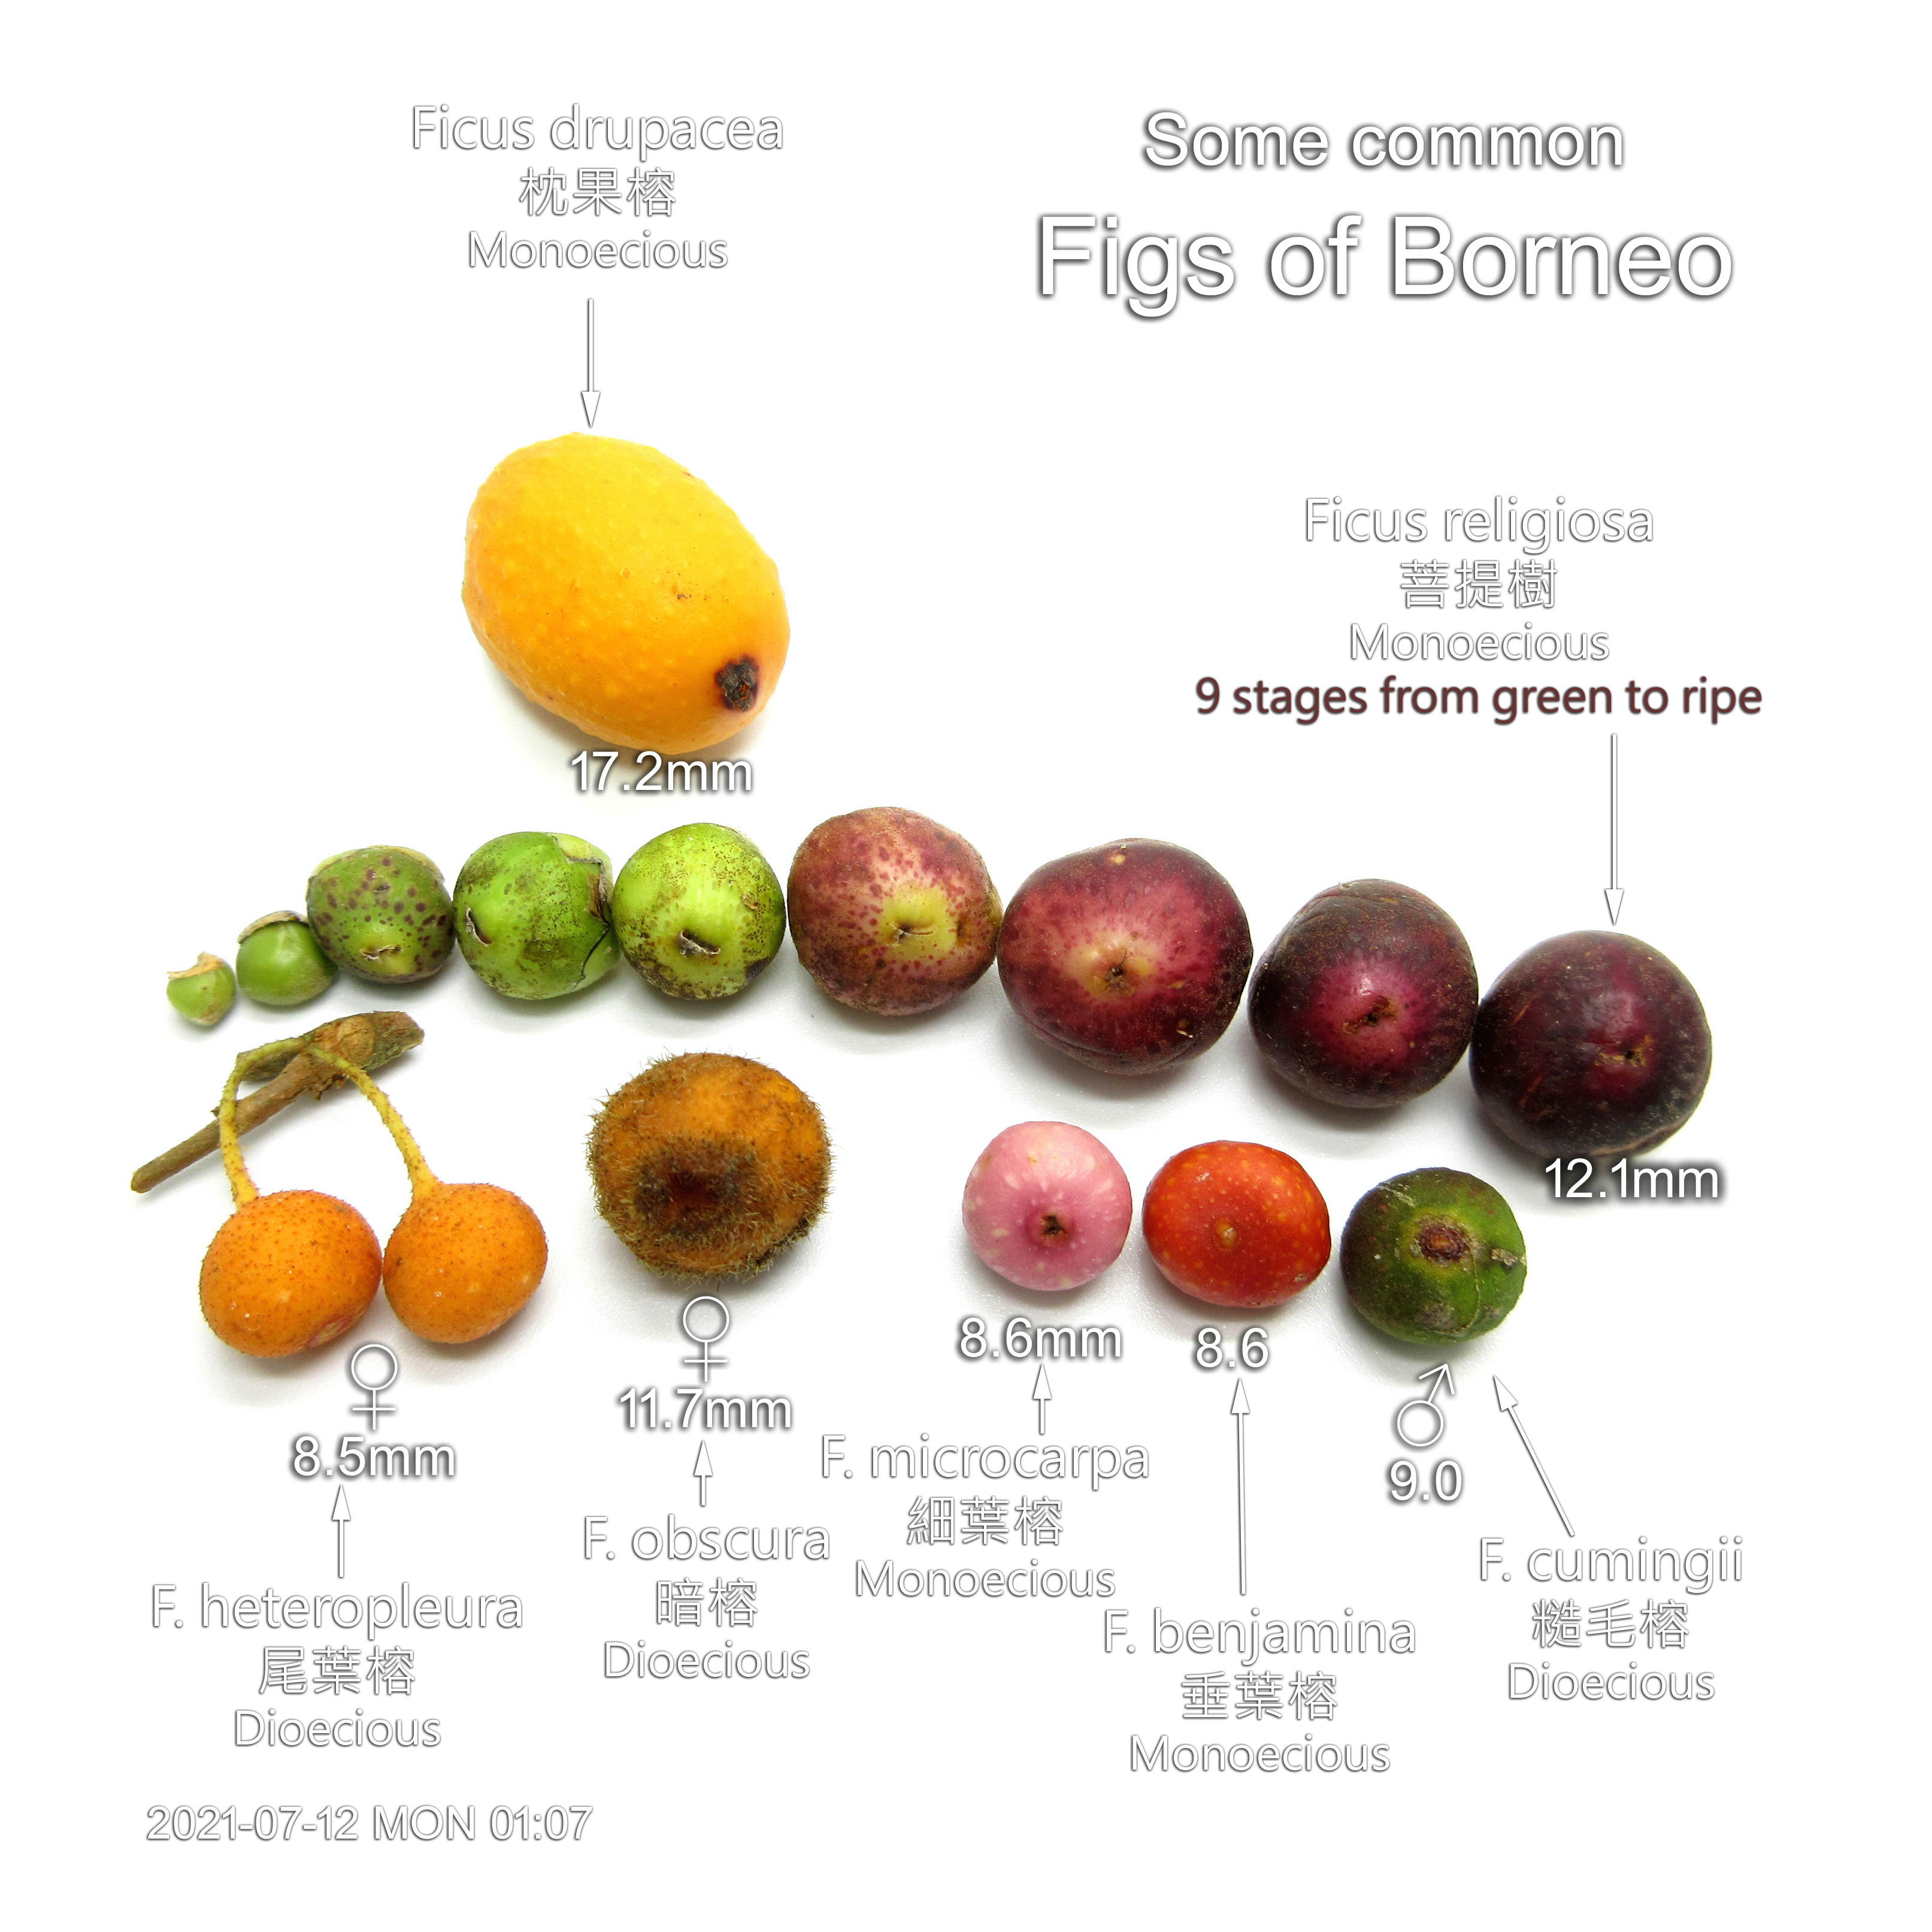 Some common Figs of Borneo